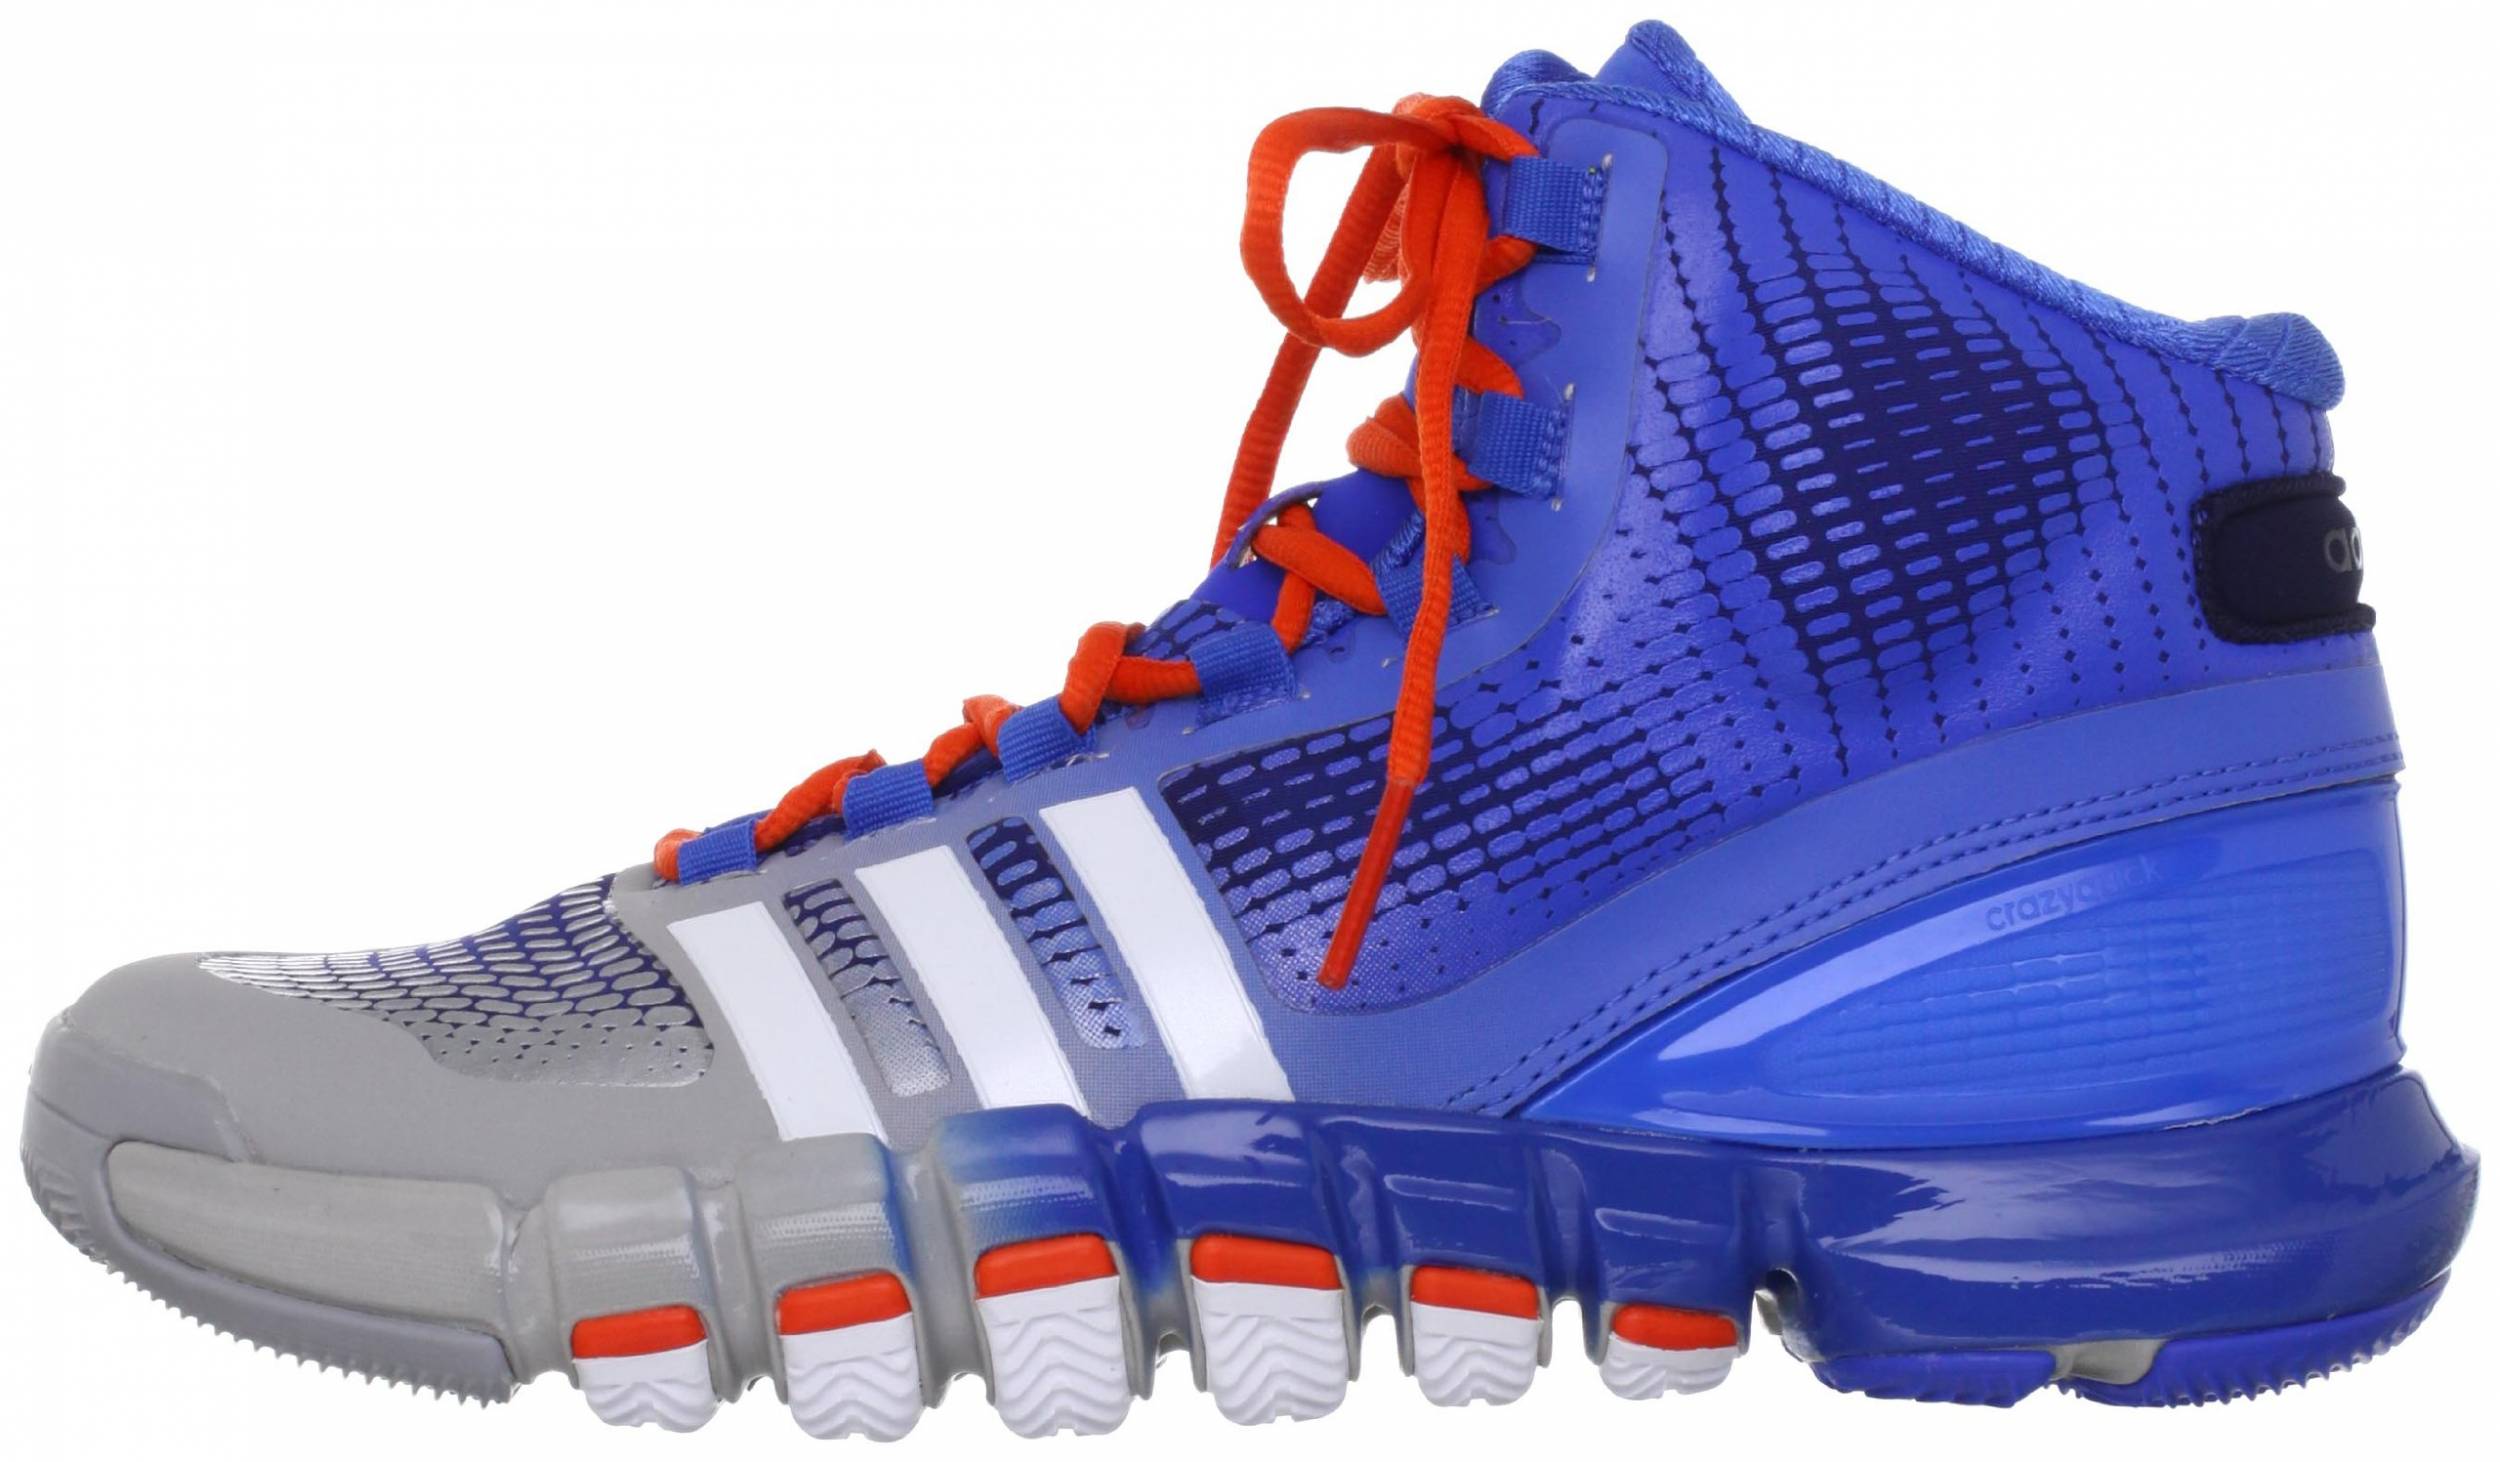 adidas crazy fast basketball shoes